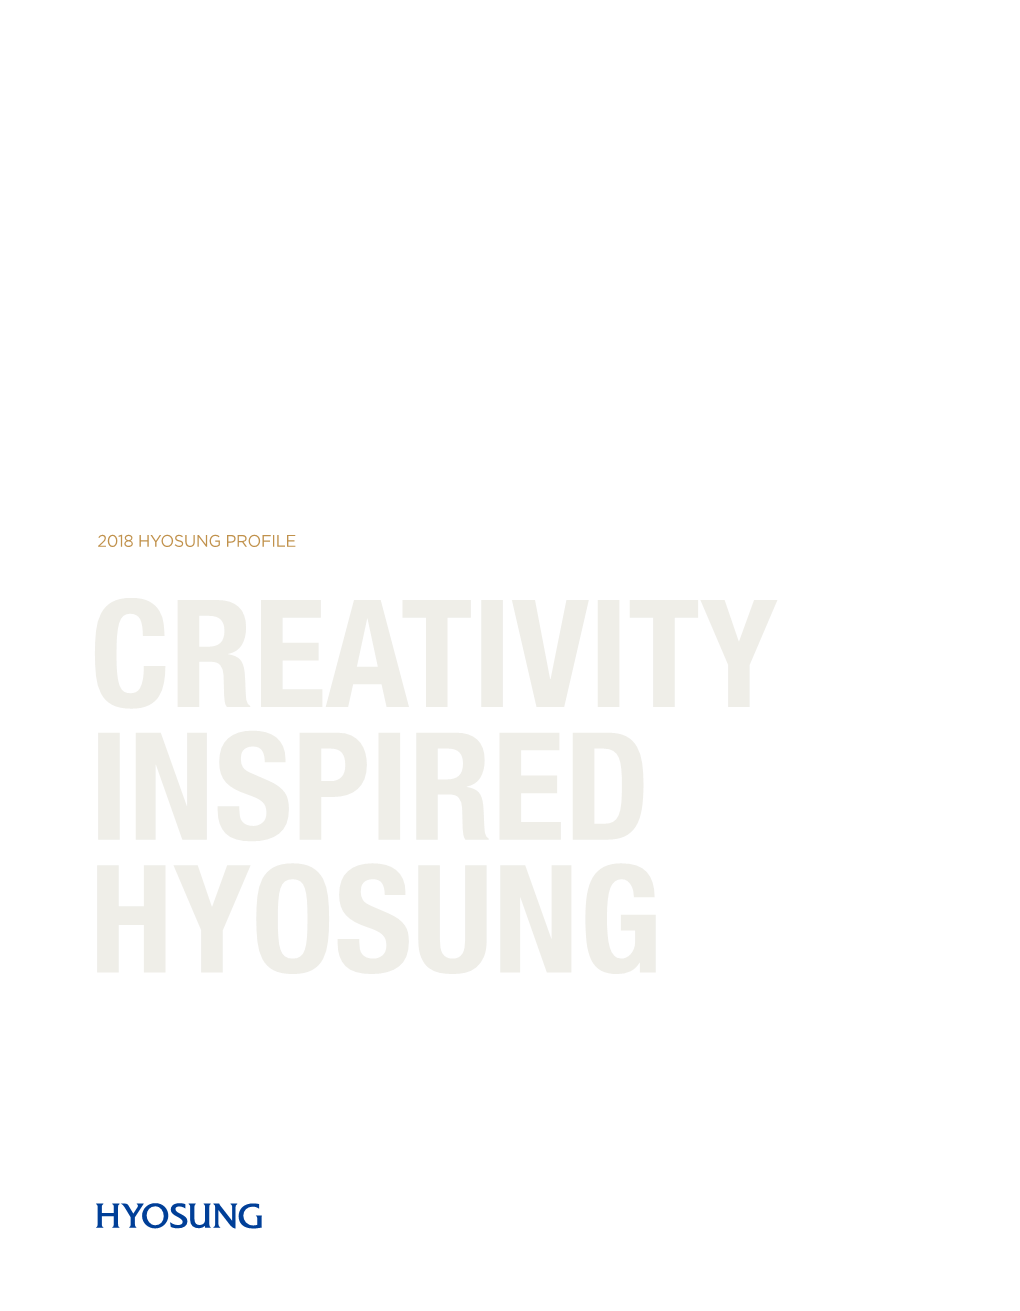 2018 Hyosung Profile 20 18 Hy O Sung Profile